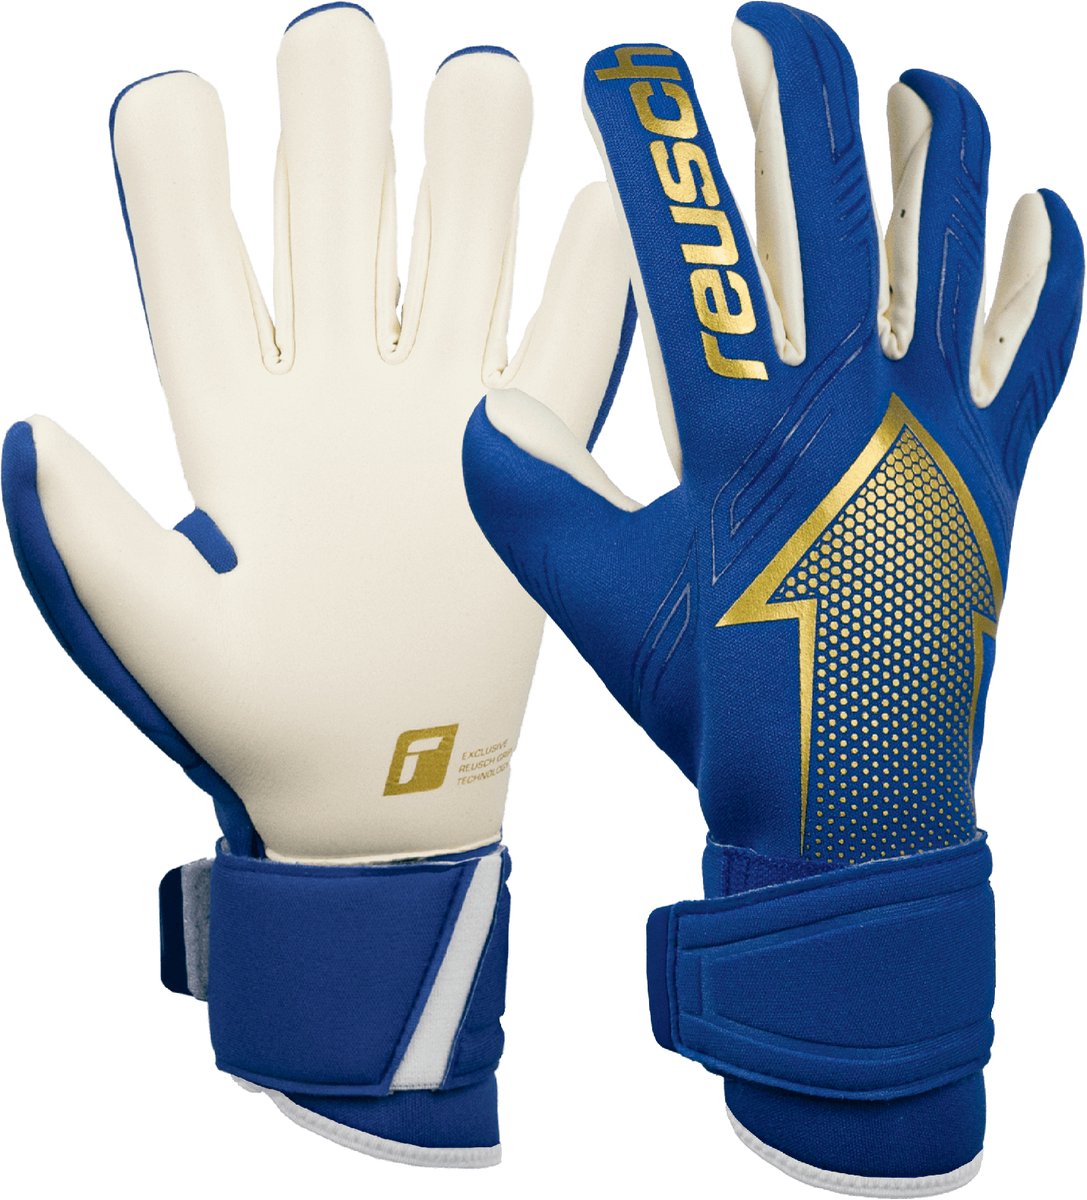 Reusch Arrow Gold X Keepershandschoenen - blauw/wit - Maat 10